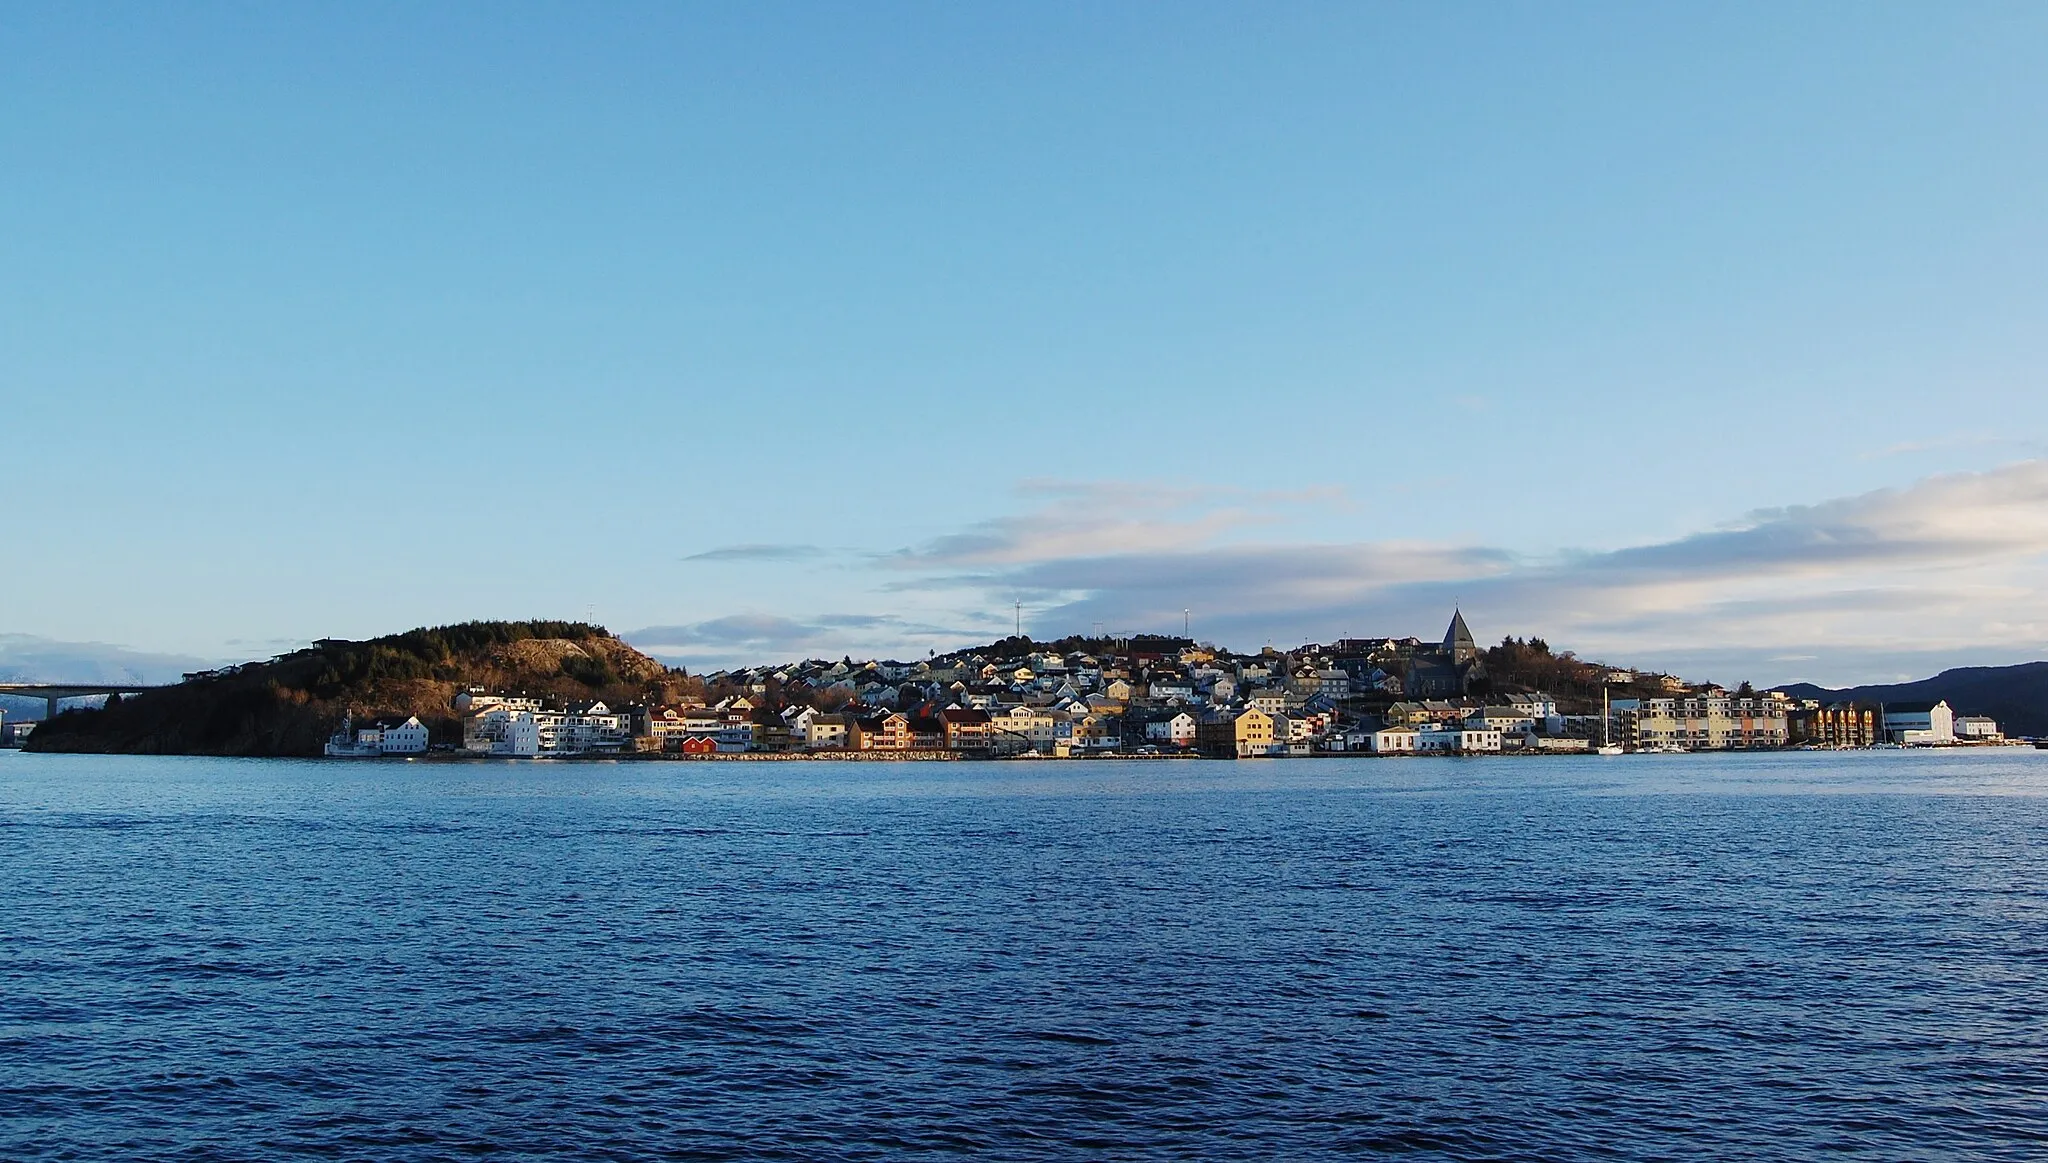 Photo showing: The island Nordlandet in Kristiansund